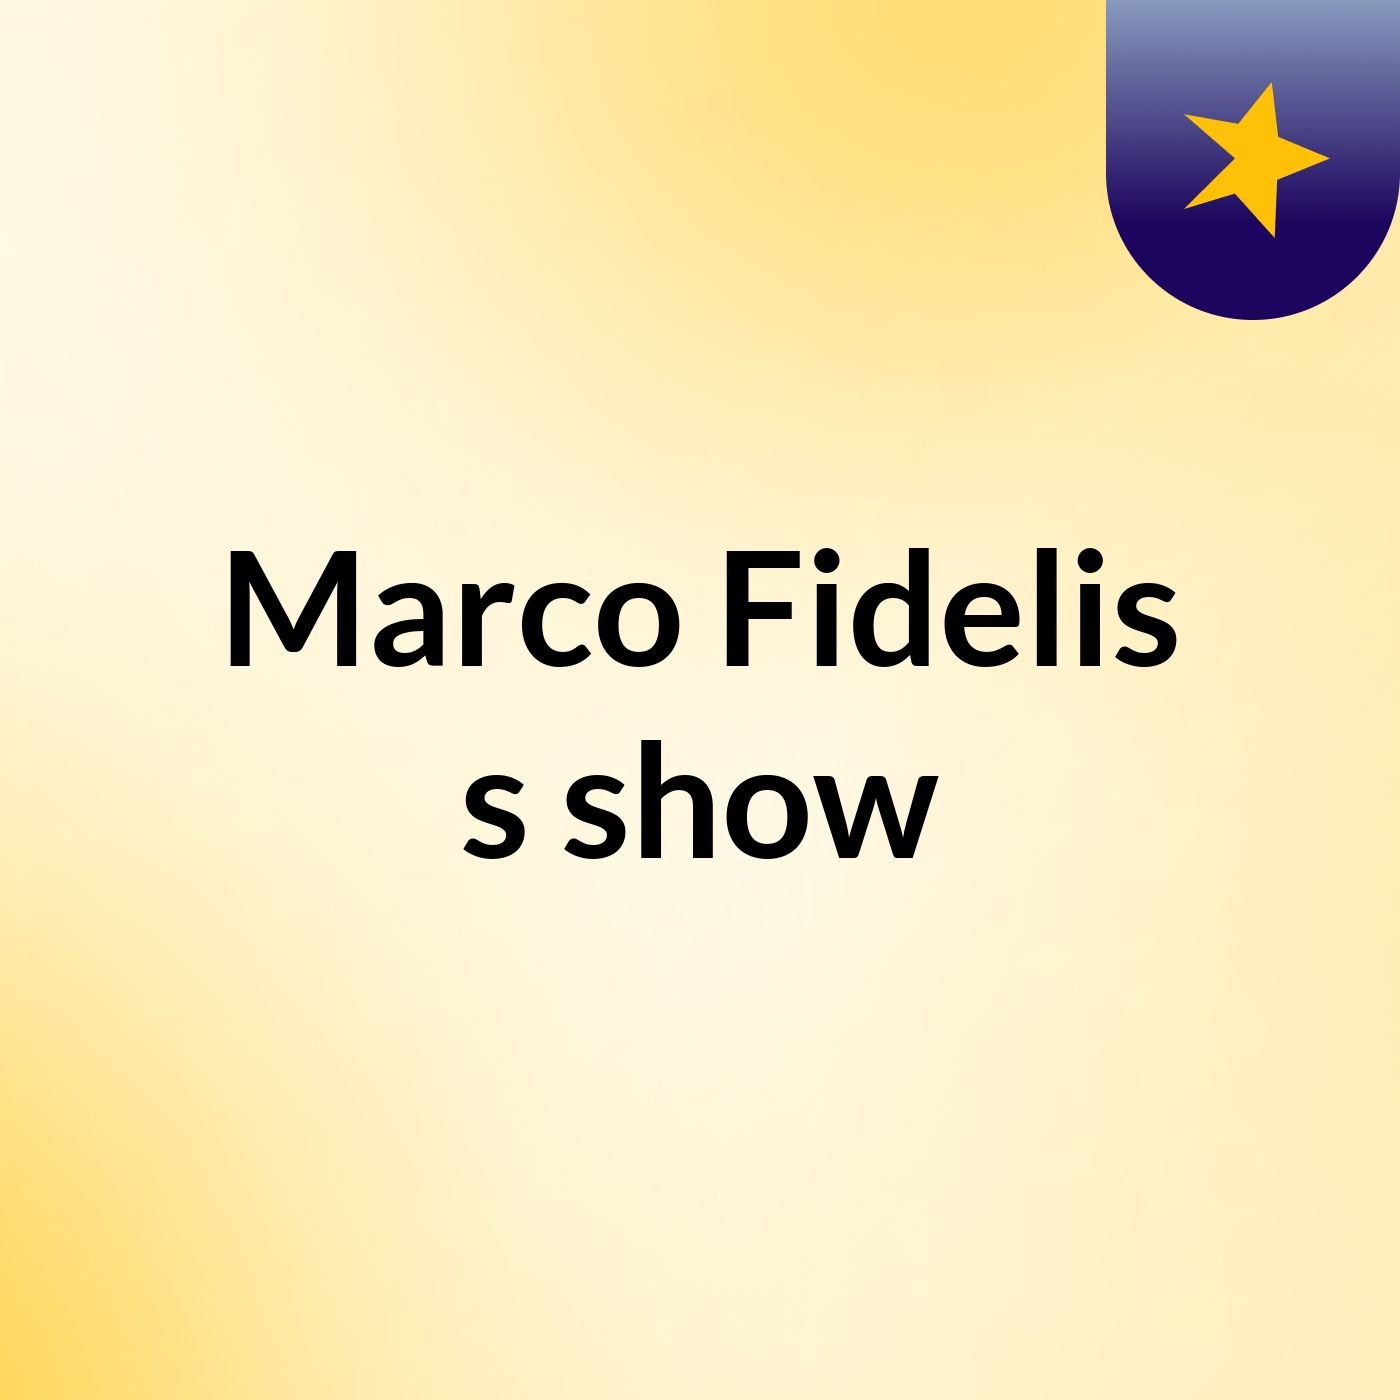 Marco Fidelis's show